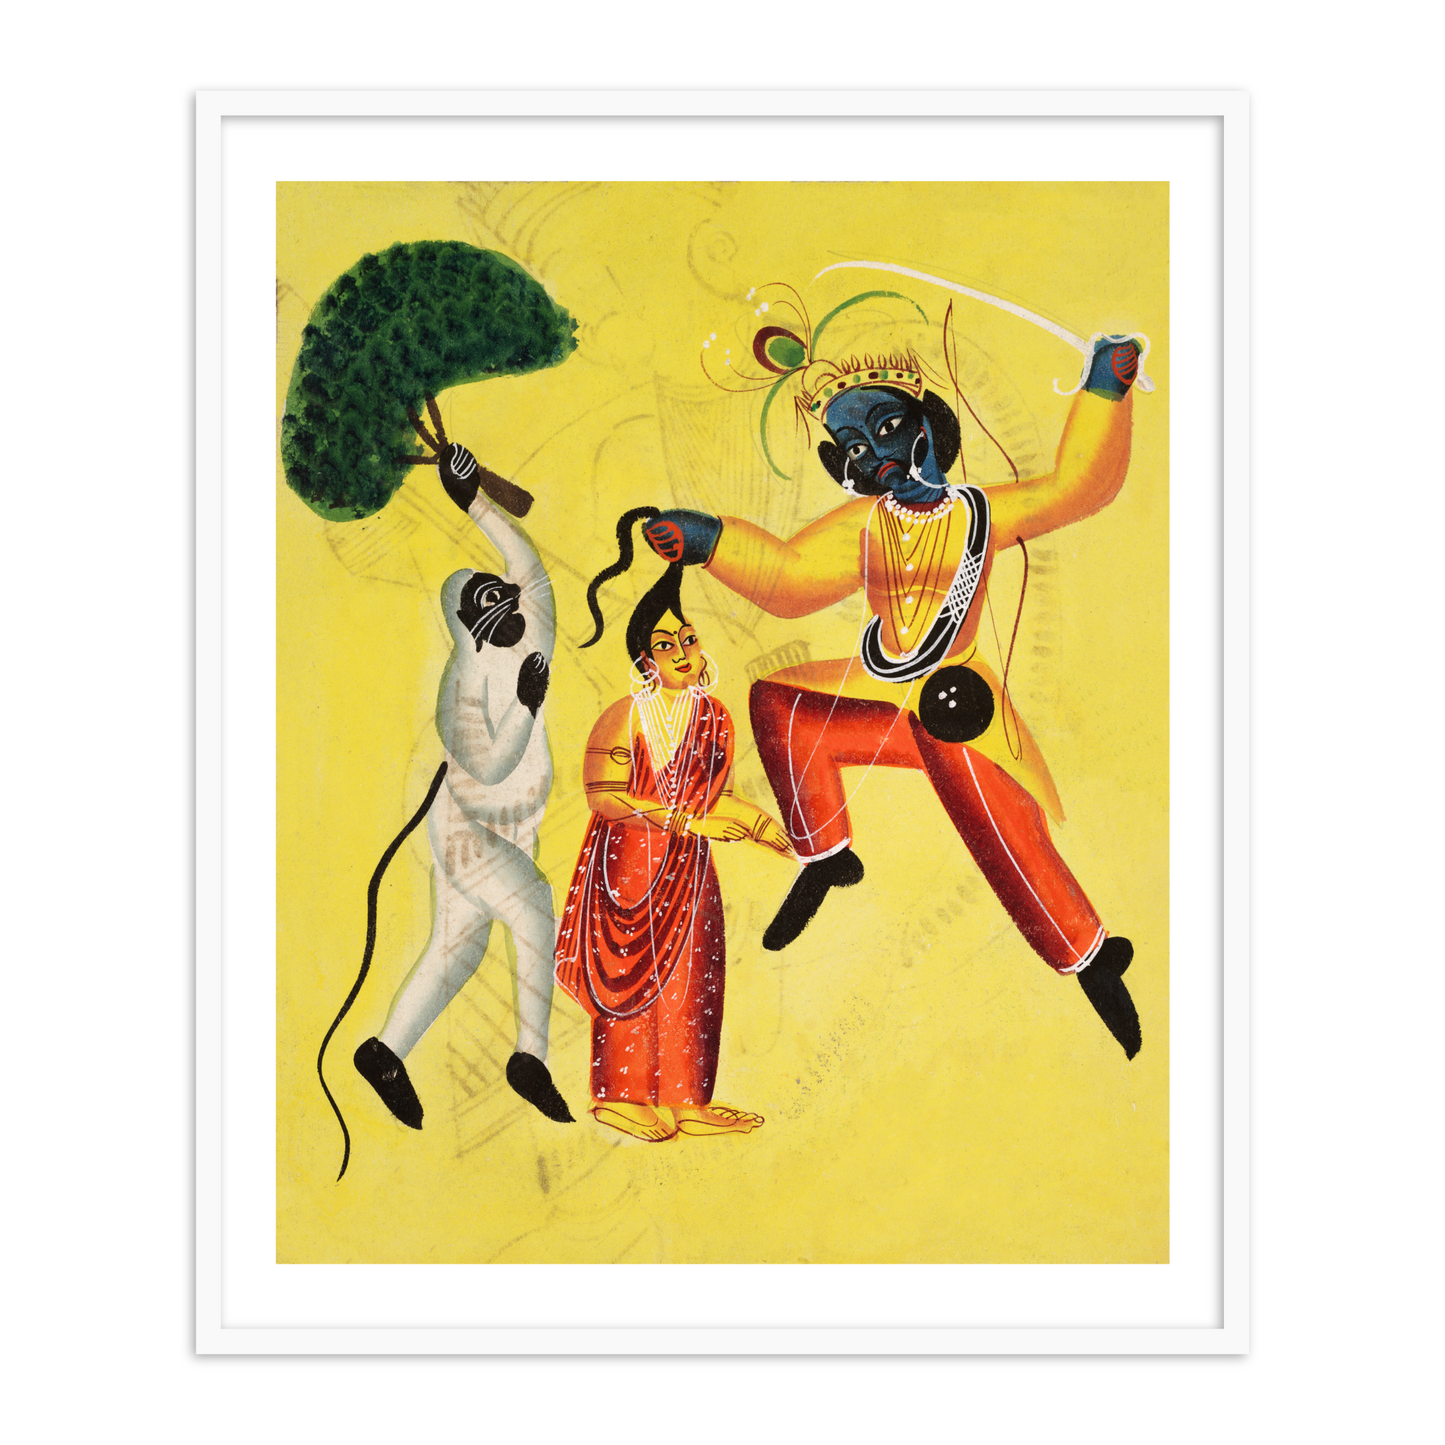 Rama and Hanuman Kailghat Framed Wall Art